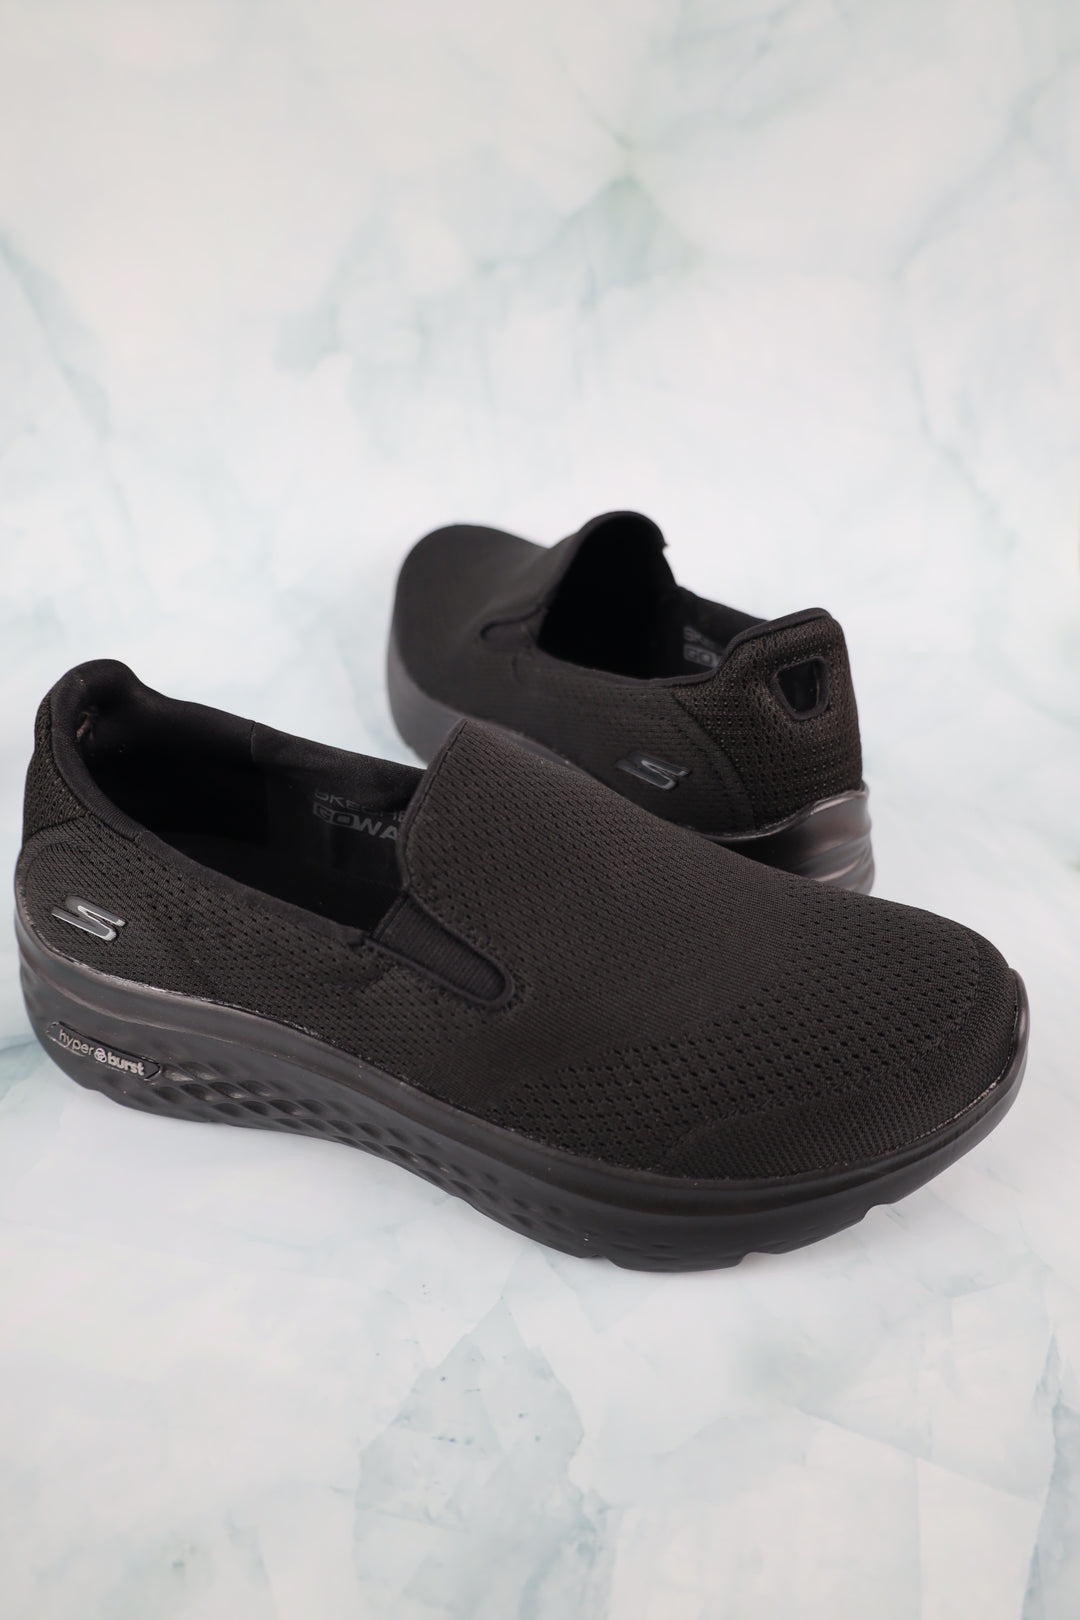 Skechers Go Walk Shoes 216188